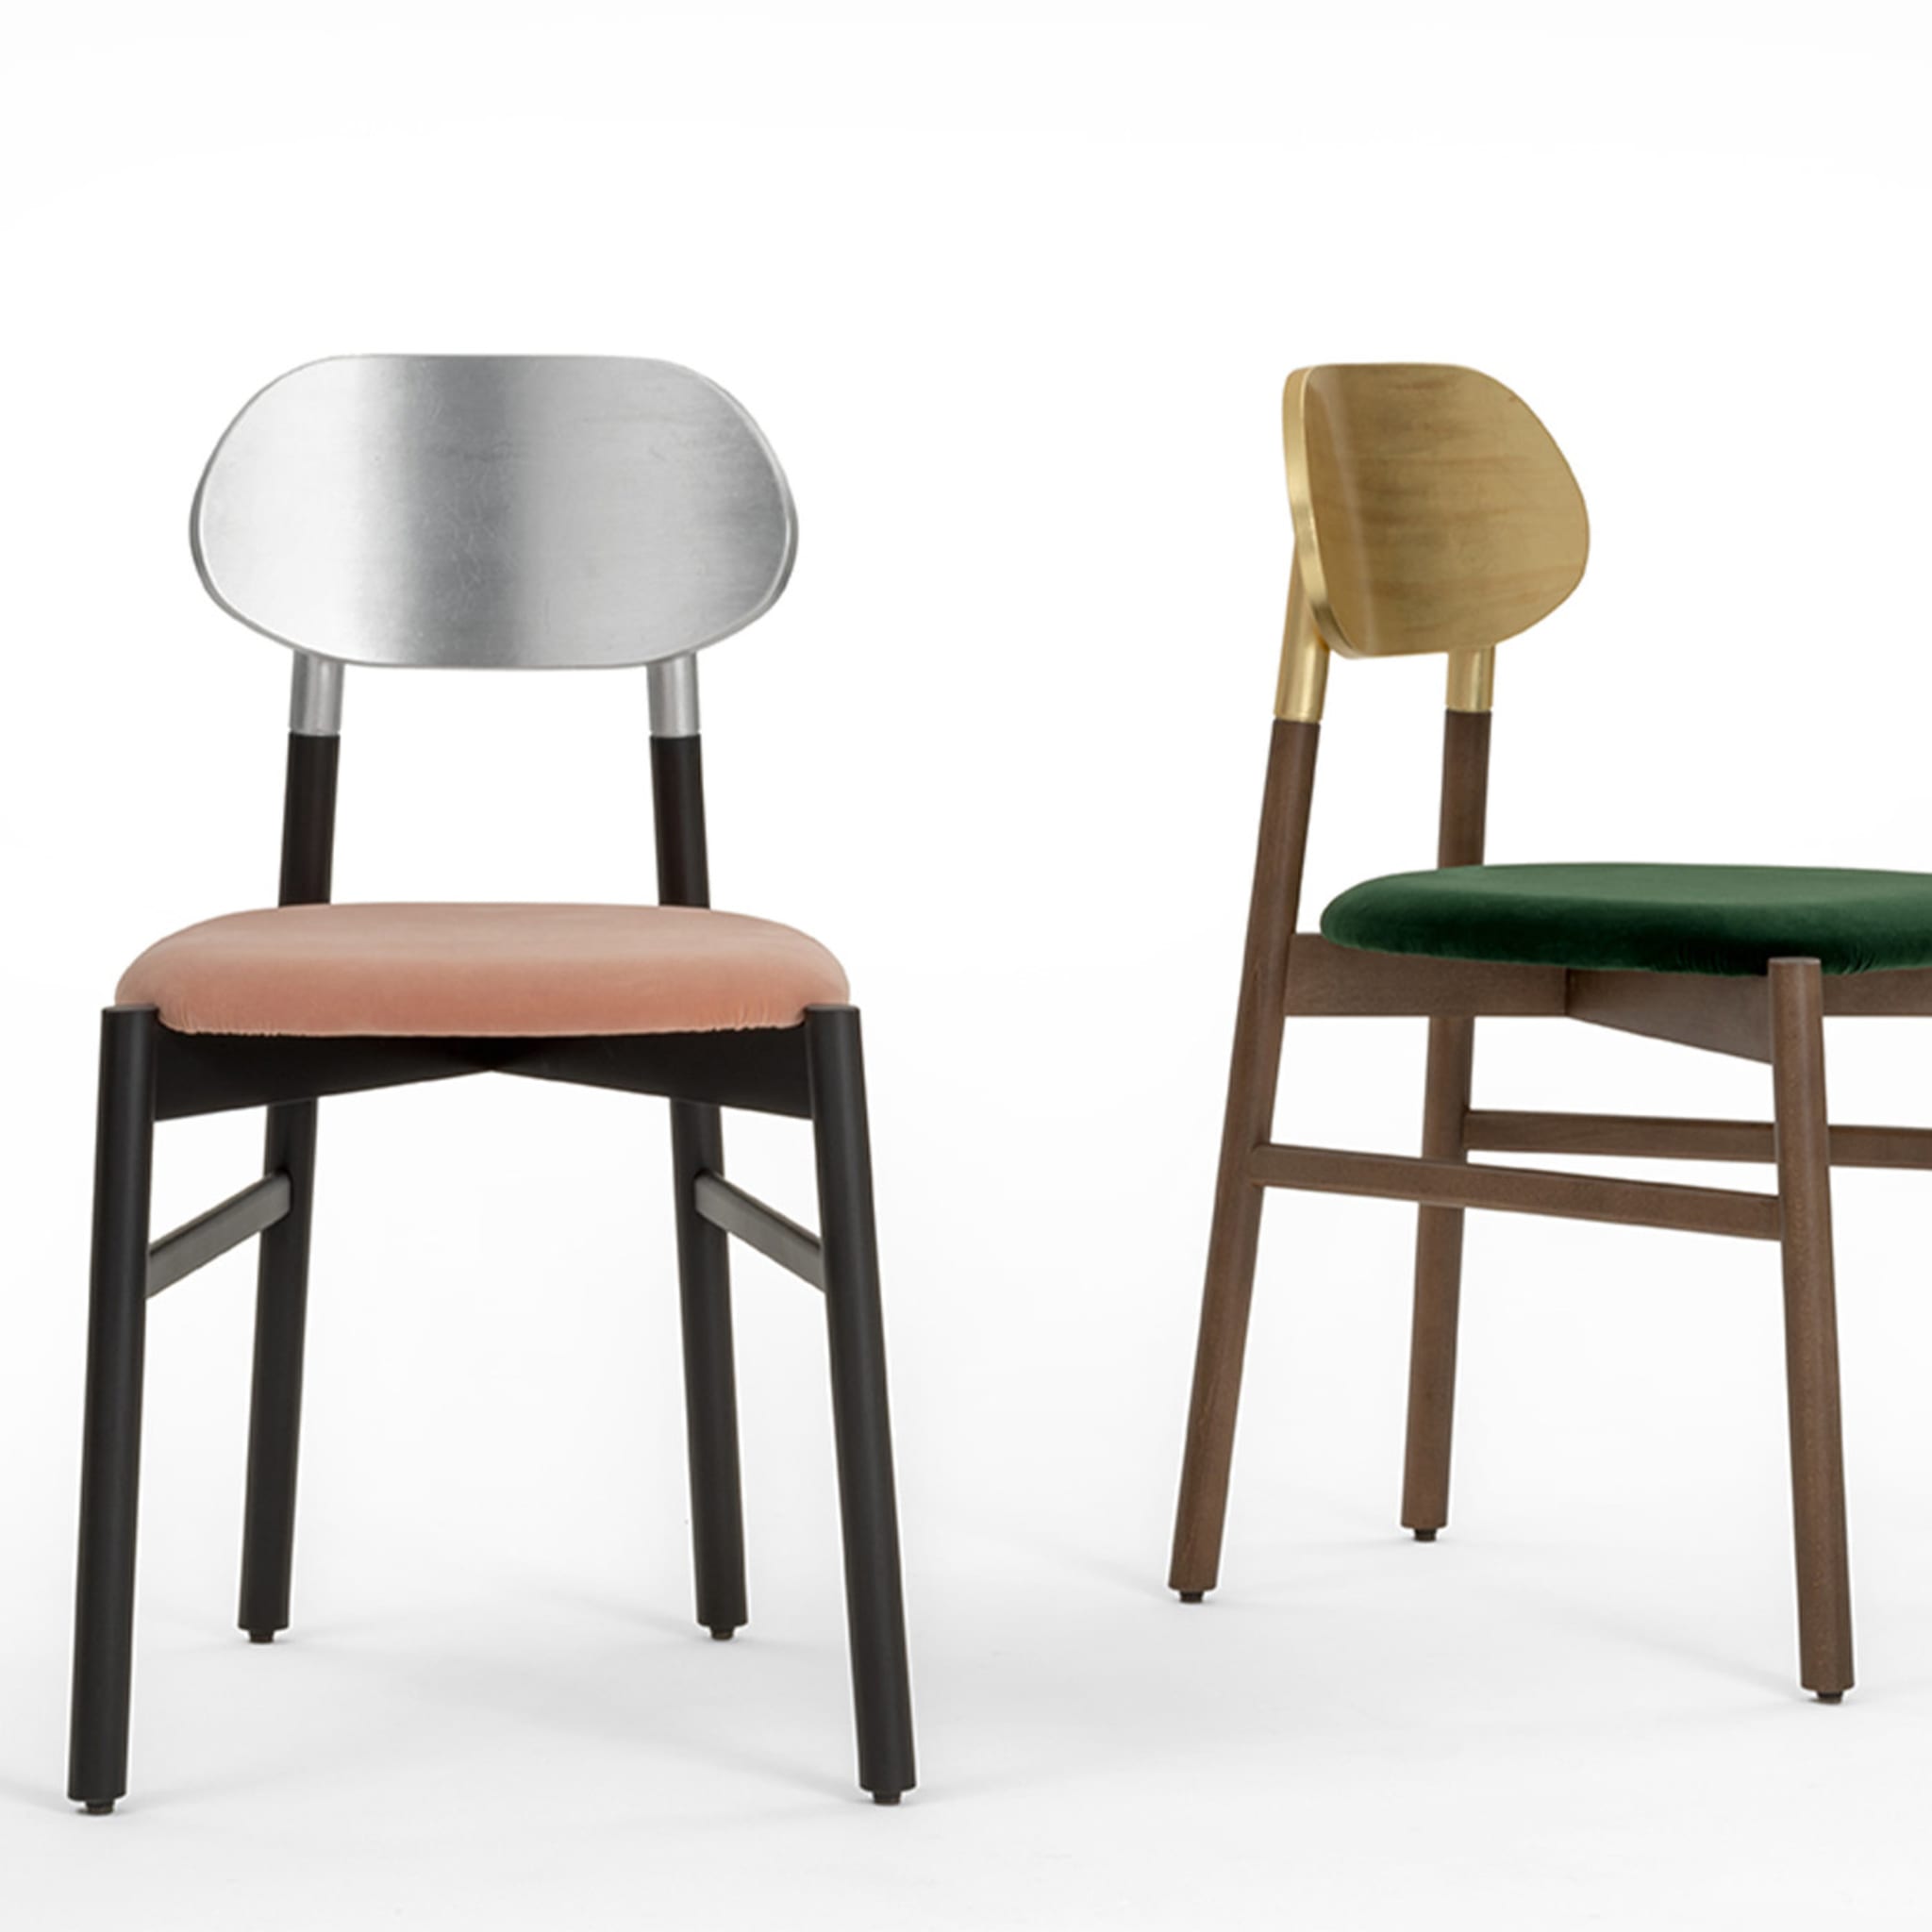 Bokken Gold and Emerald Chair by Bellavista & Piccini - Alternative view 2